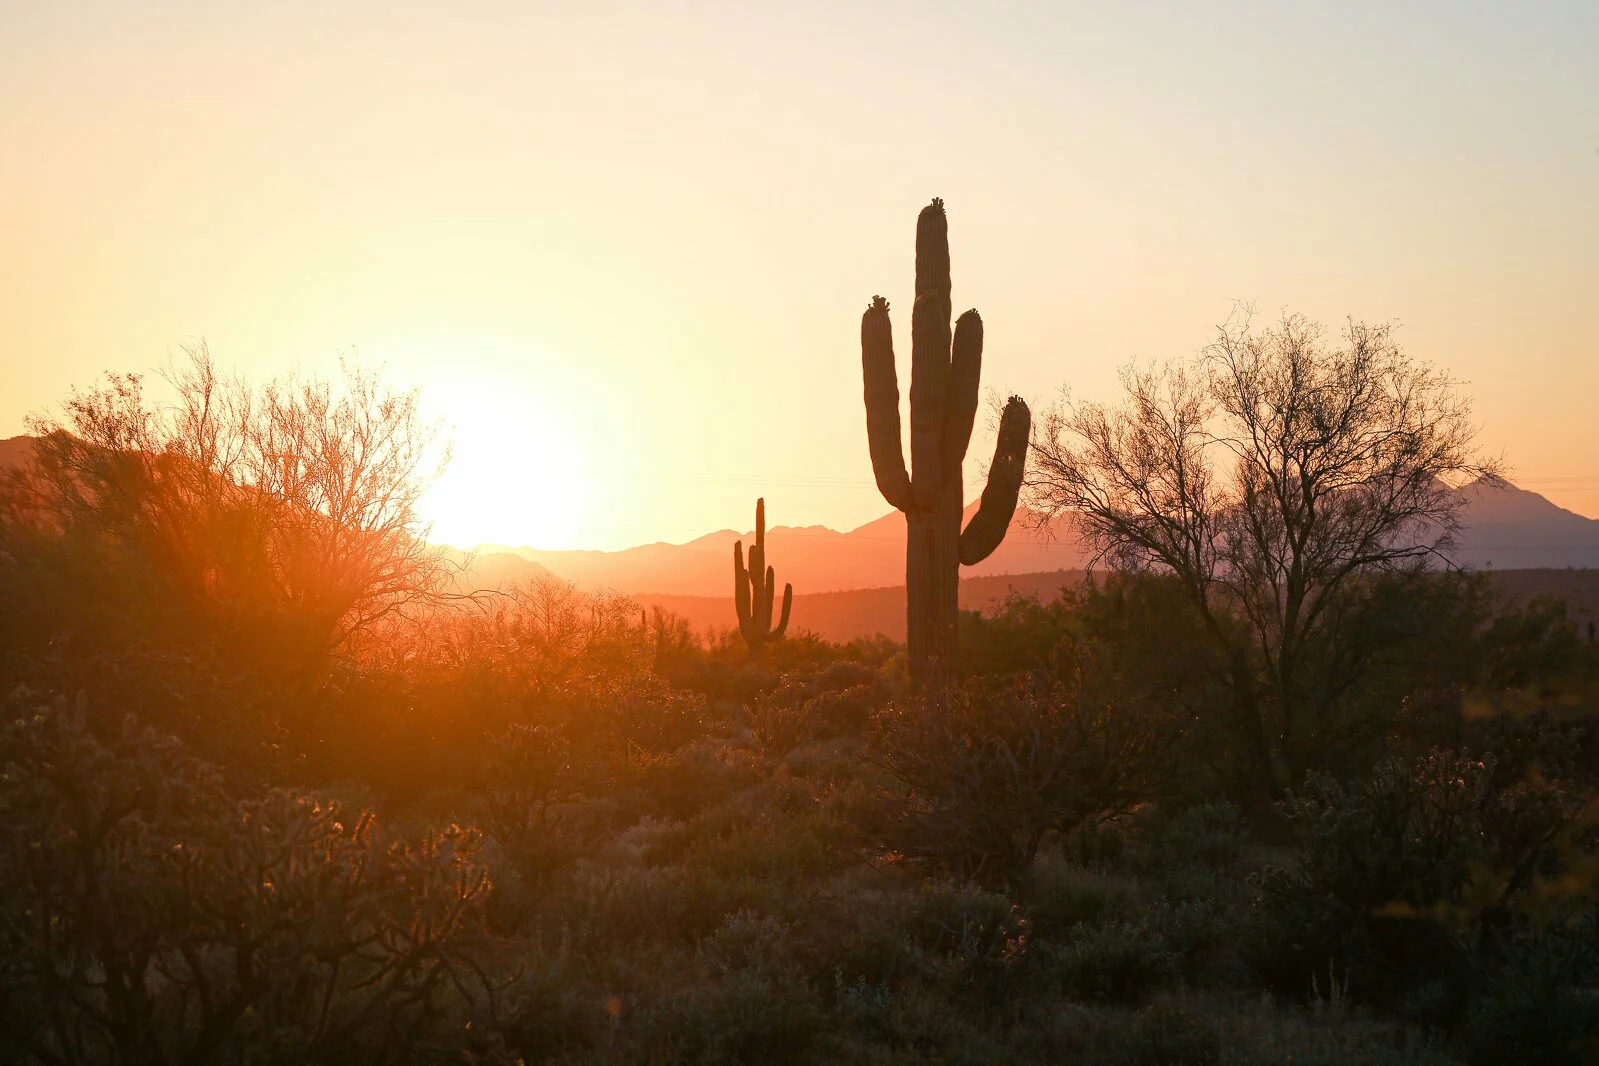 landscape photo of the phoenix desert, cacti and desert brush, mountains in background, photo taken at sunset.